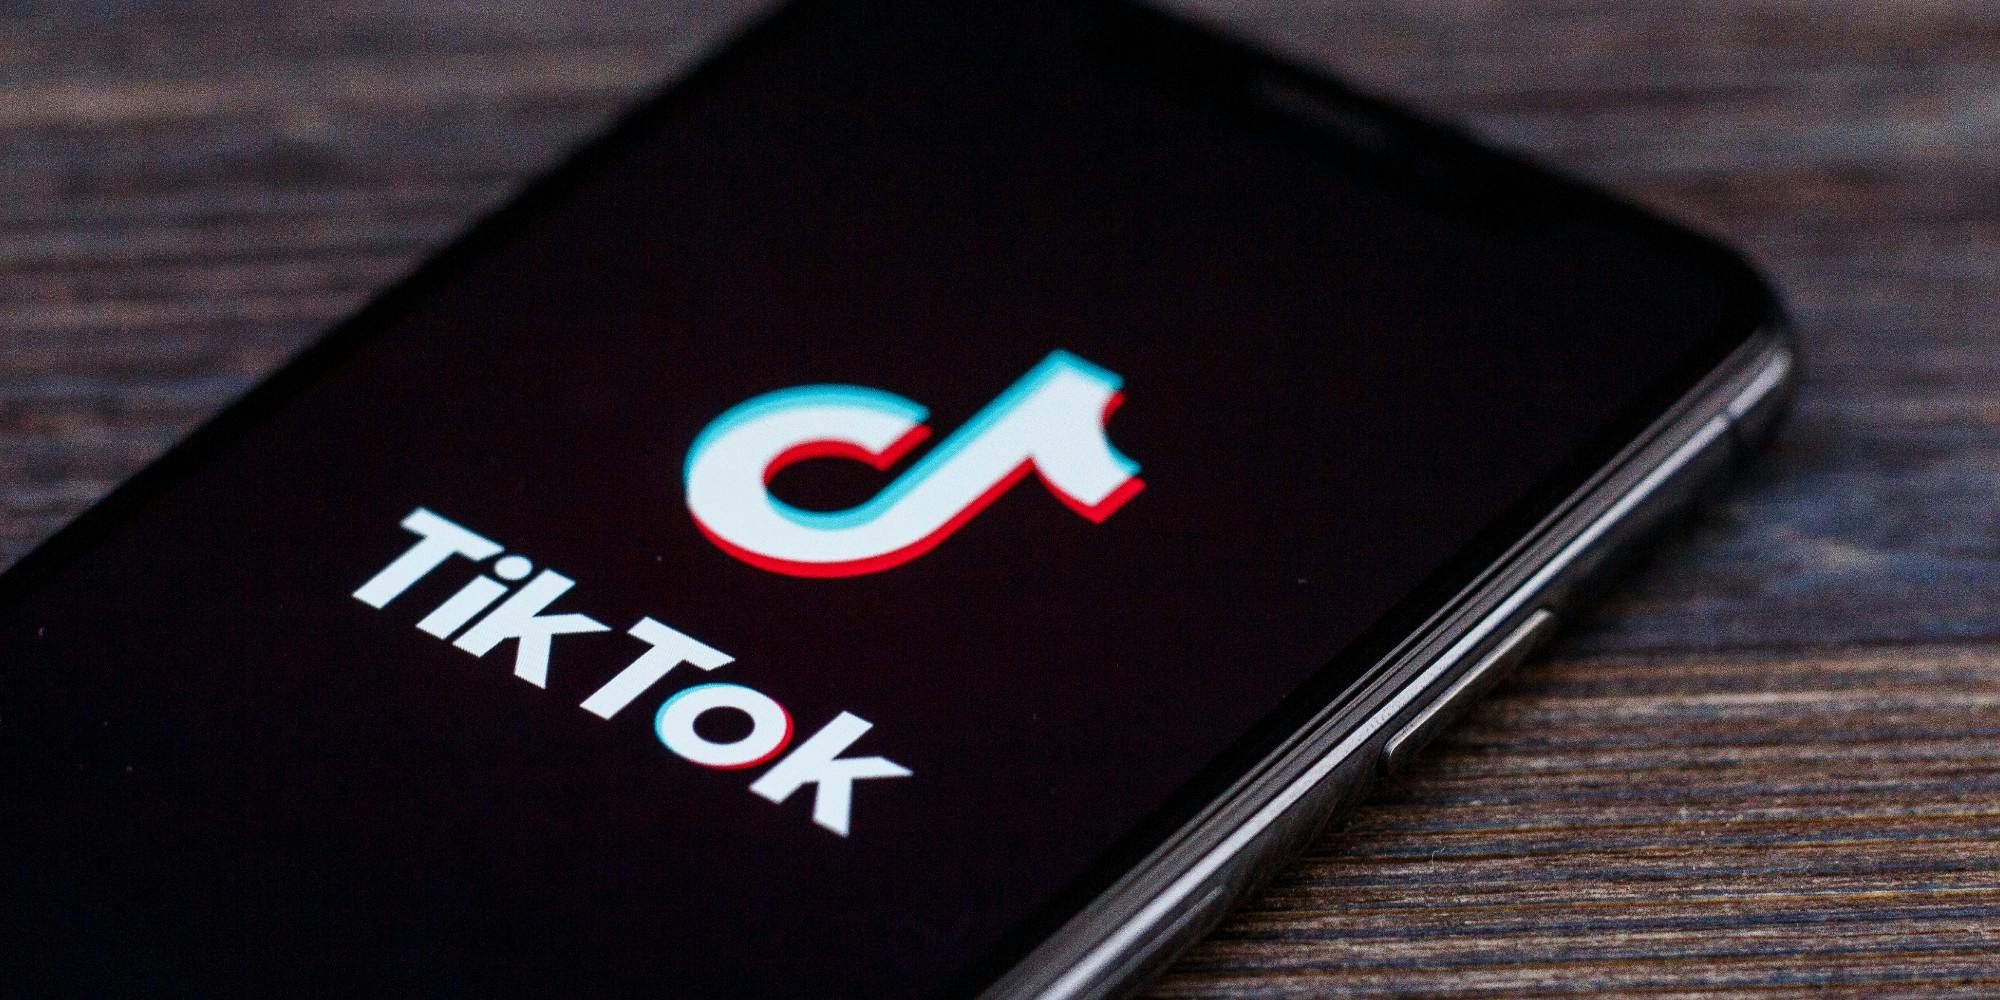  Tiktok logo design on phone screen